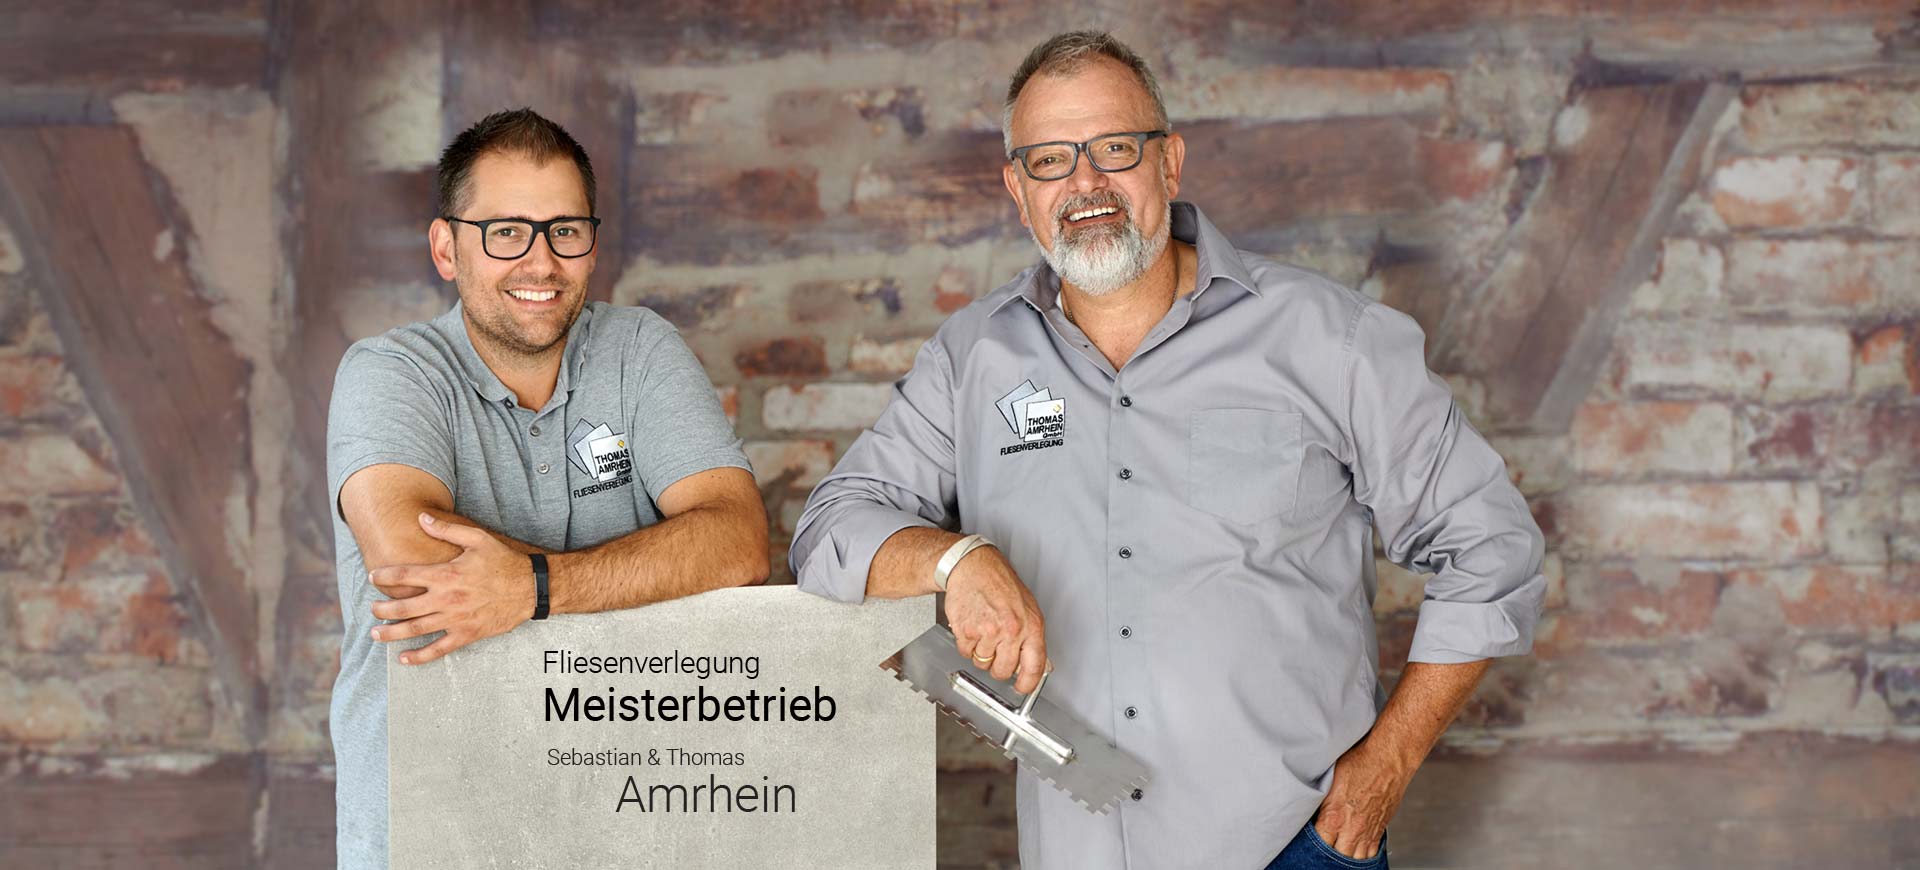 Fliesenverlegung Meisterbetrieb Sebastian & Thomas Amrhein